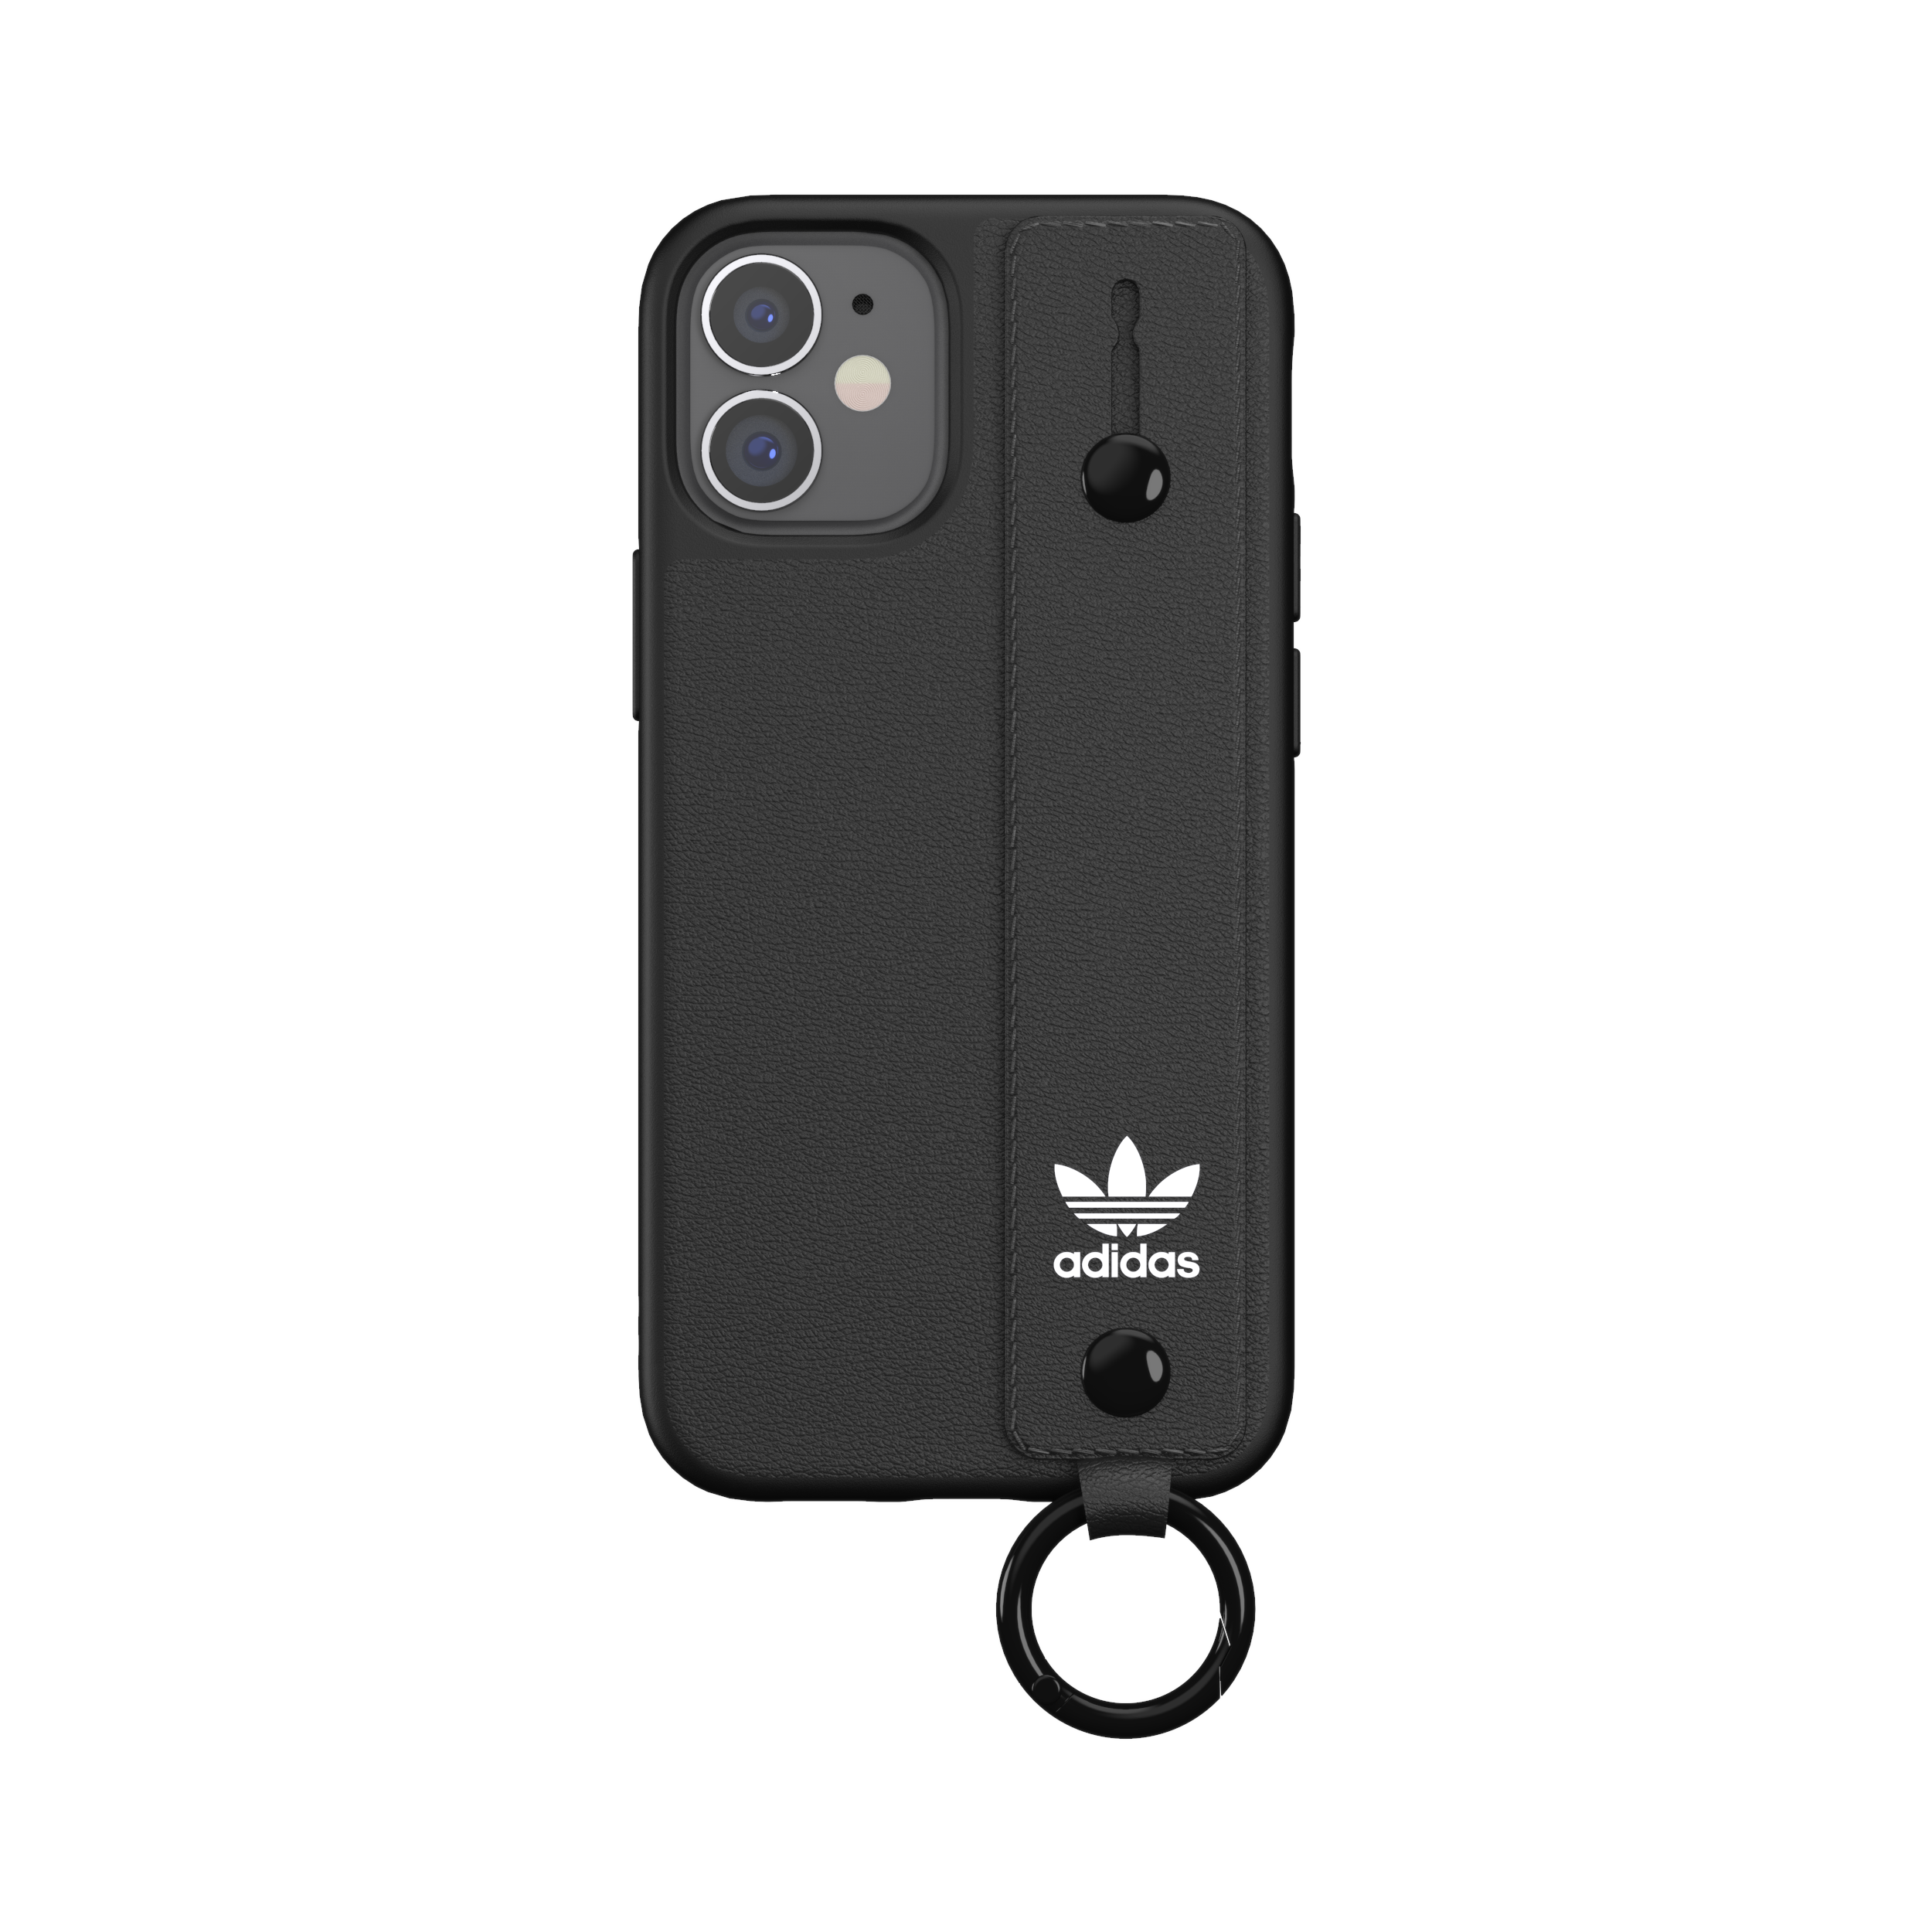 Adidas ORIGINALS Apple iPhone 12 Mini HandStrap Case - Back cover w/ HandStrap & Carabiner in Trefoil Design, Scratch & Drop Protection, Wireless Charging Compatible - Black